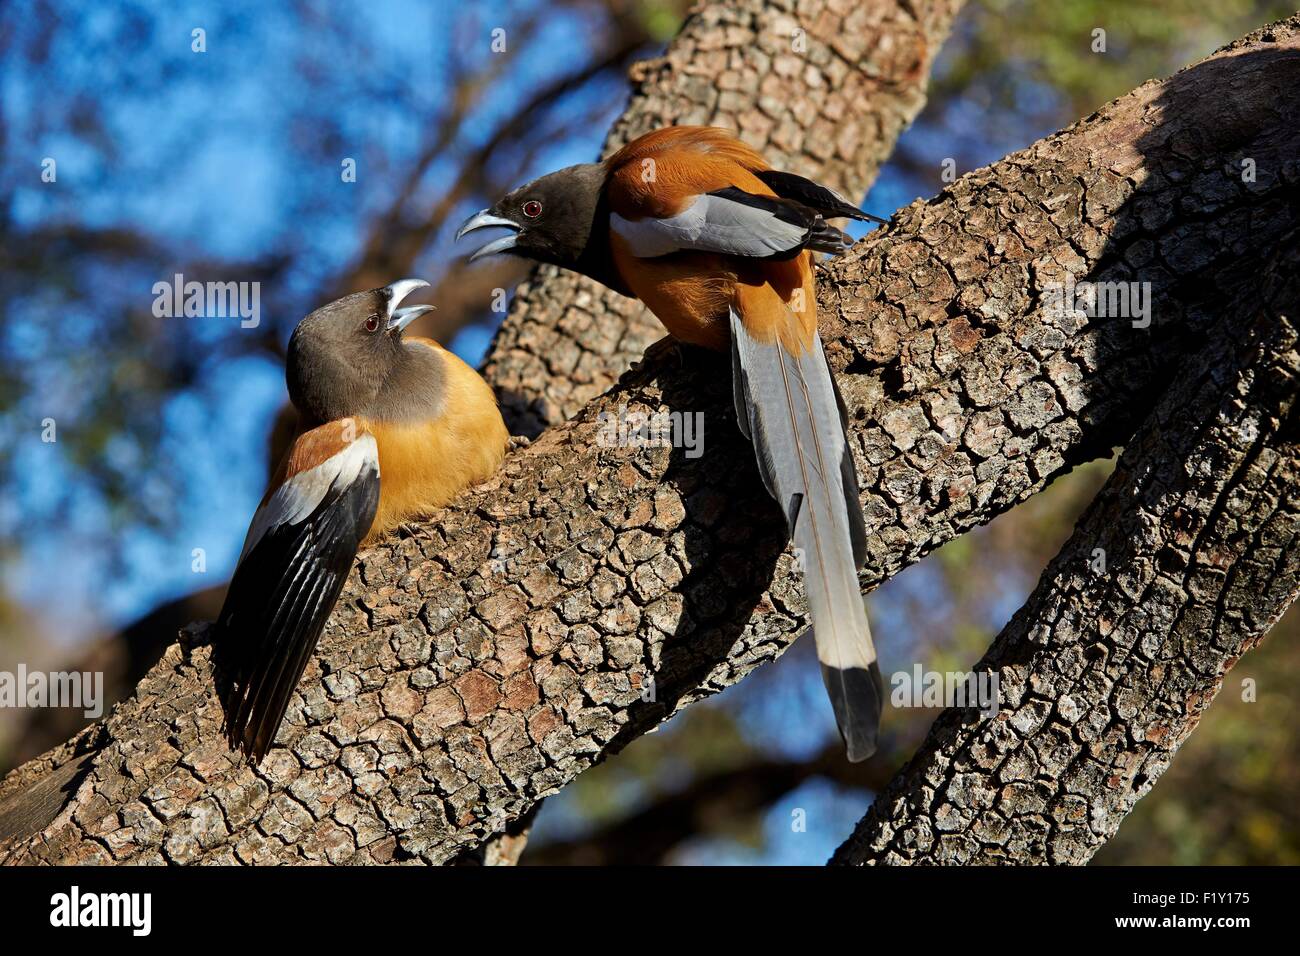 India, Rajasthan state, Ranthambore National Park, Rufous Treepie (Dendrocitta vagabunda), fight between twoo birds Stock Photo